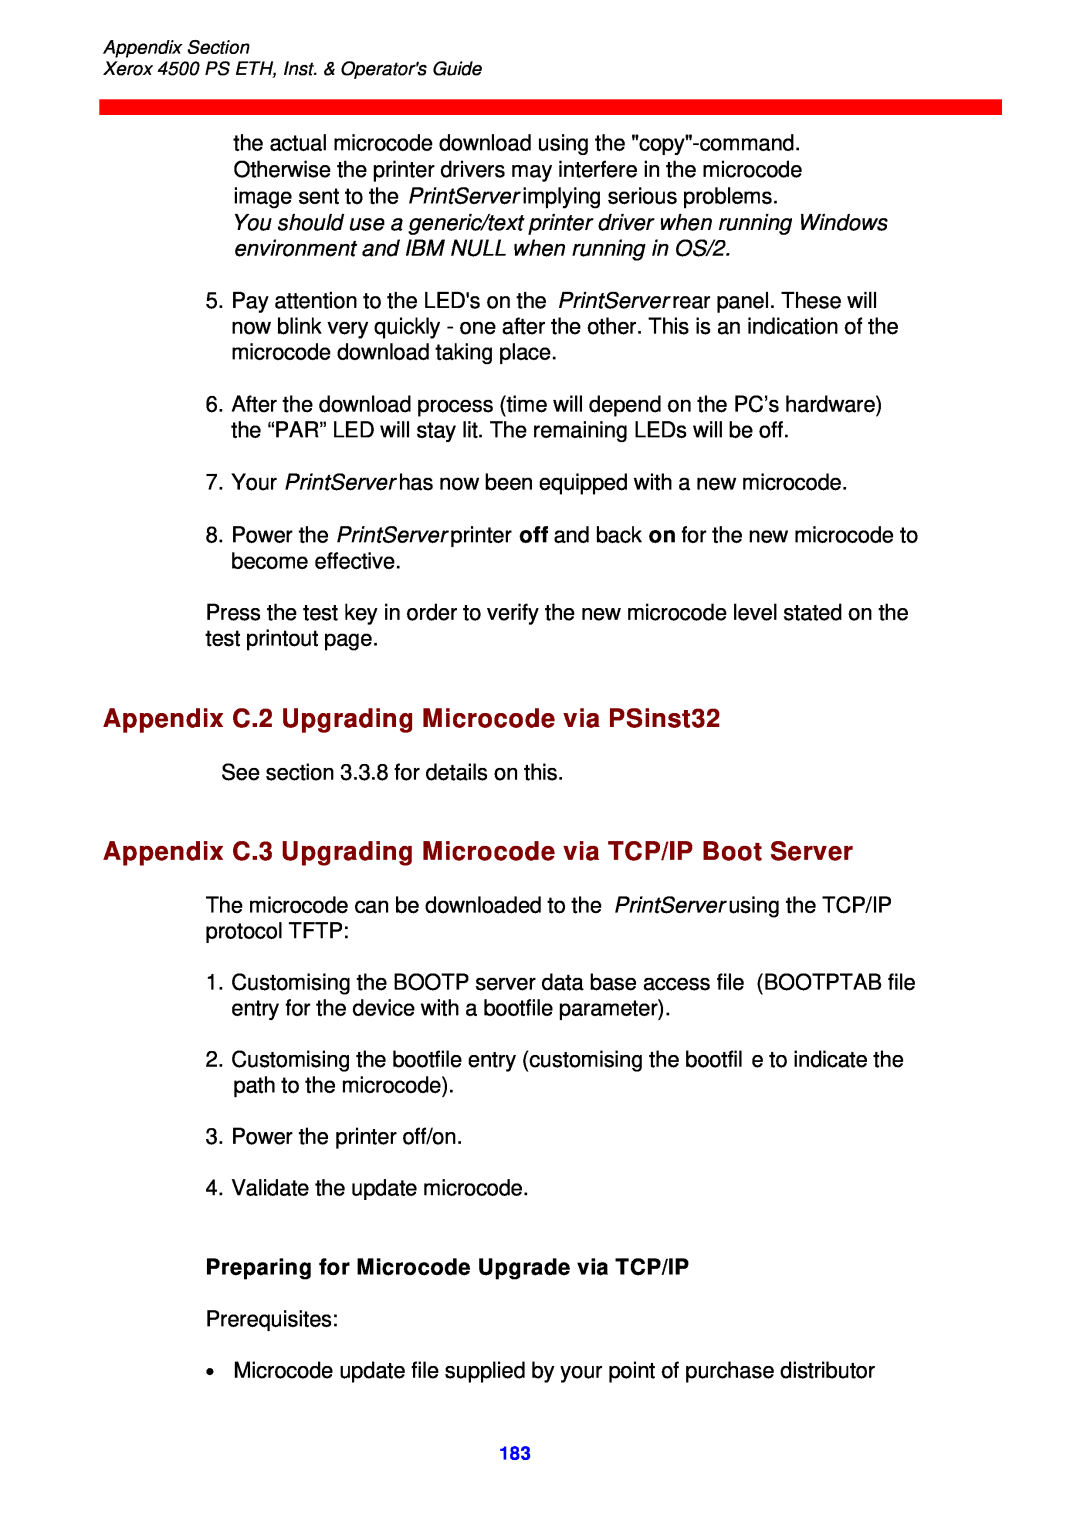 Xerox 4500 ps eth Appendix C.2 Upgrading Microcode via PSinst32, Appendix C.3 Upgrading Microcode via TCP/IP Boot Server 